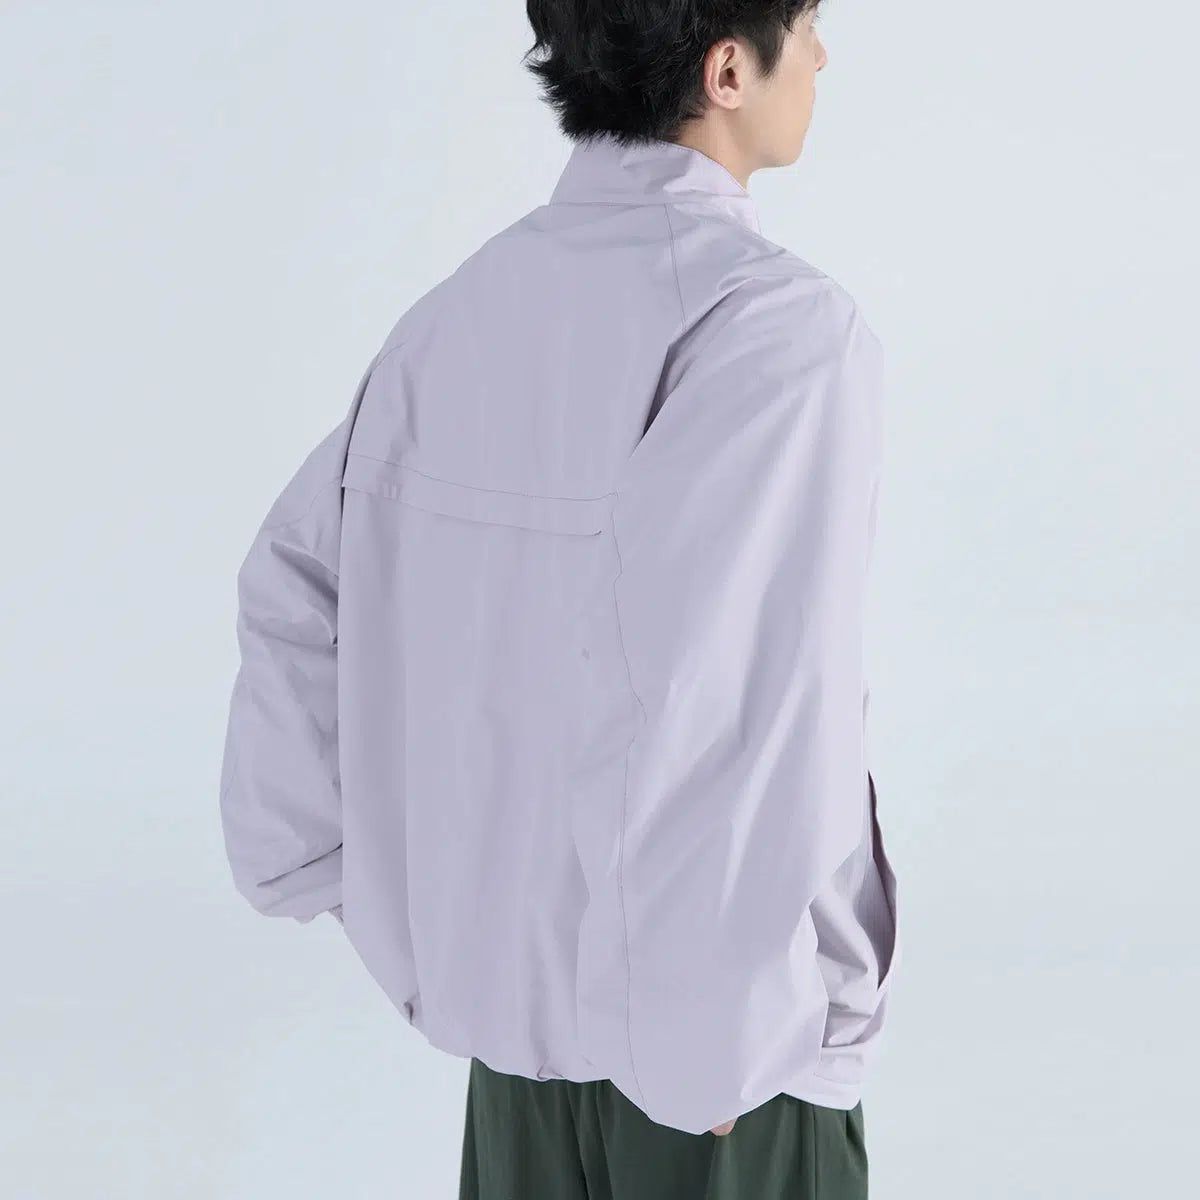 Versatile Zipped Boxy Jacket Korean Street Fashion Jacket By Mentmate Shop Online at OH Vault